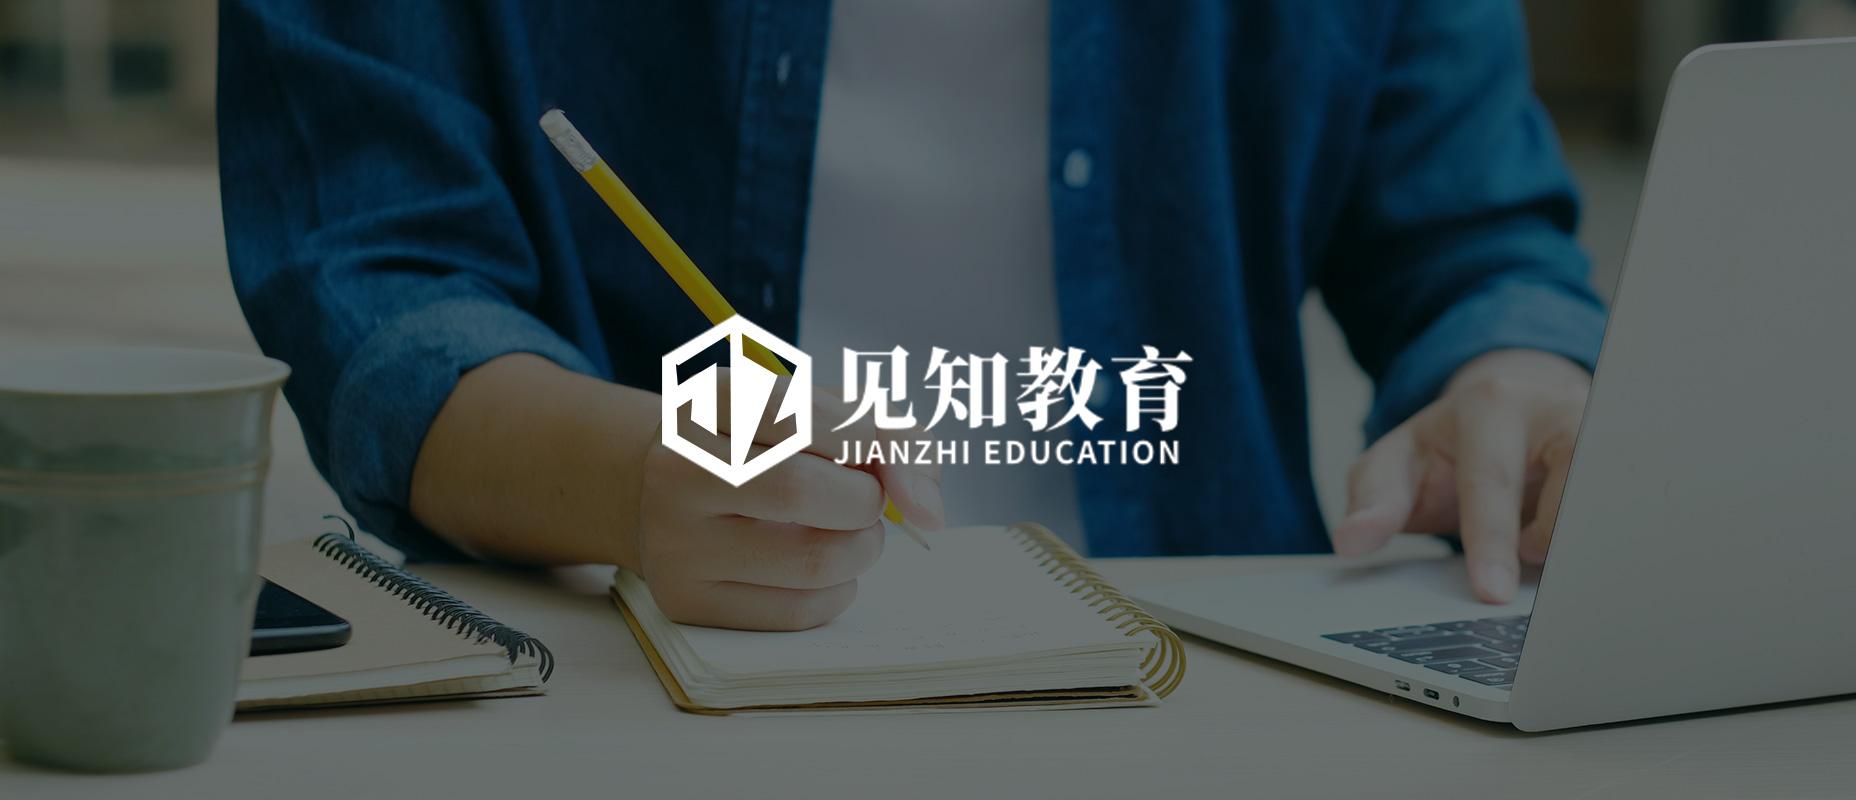 OPI de Jianzhi Education Technology: plataforma educativa de China